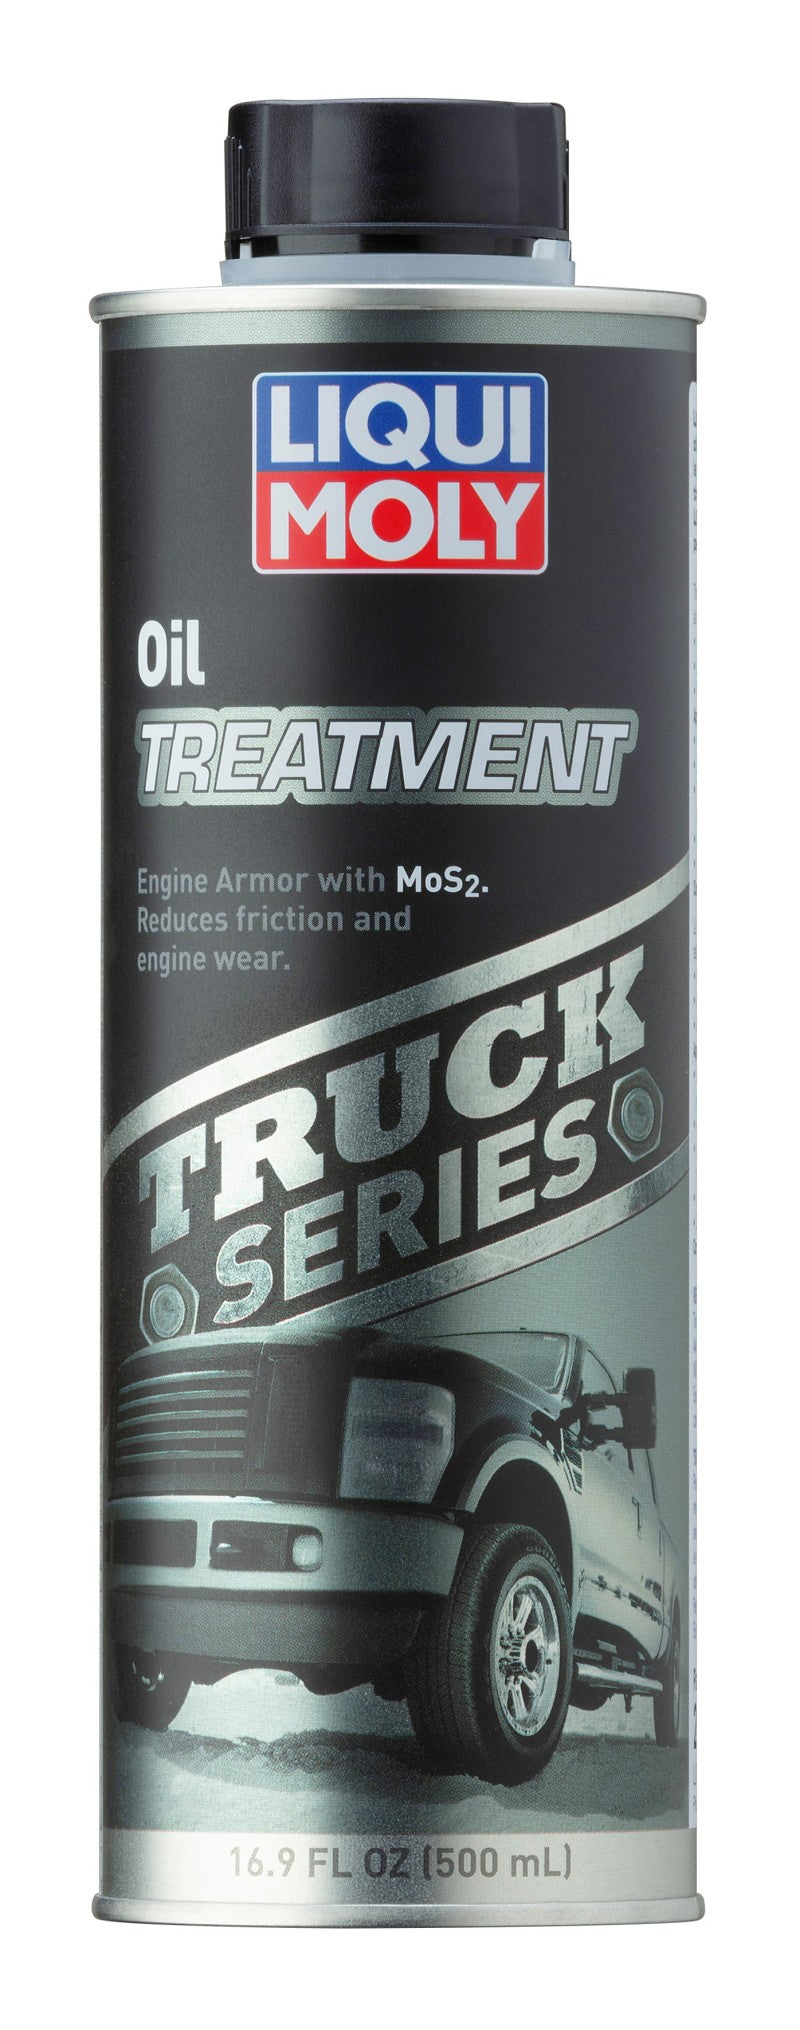 LIQUI MOLY 500mL Truck Series Oil Treatment.